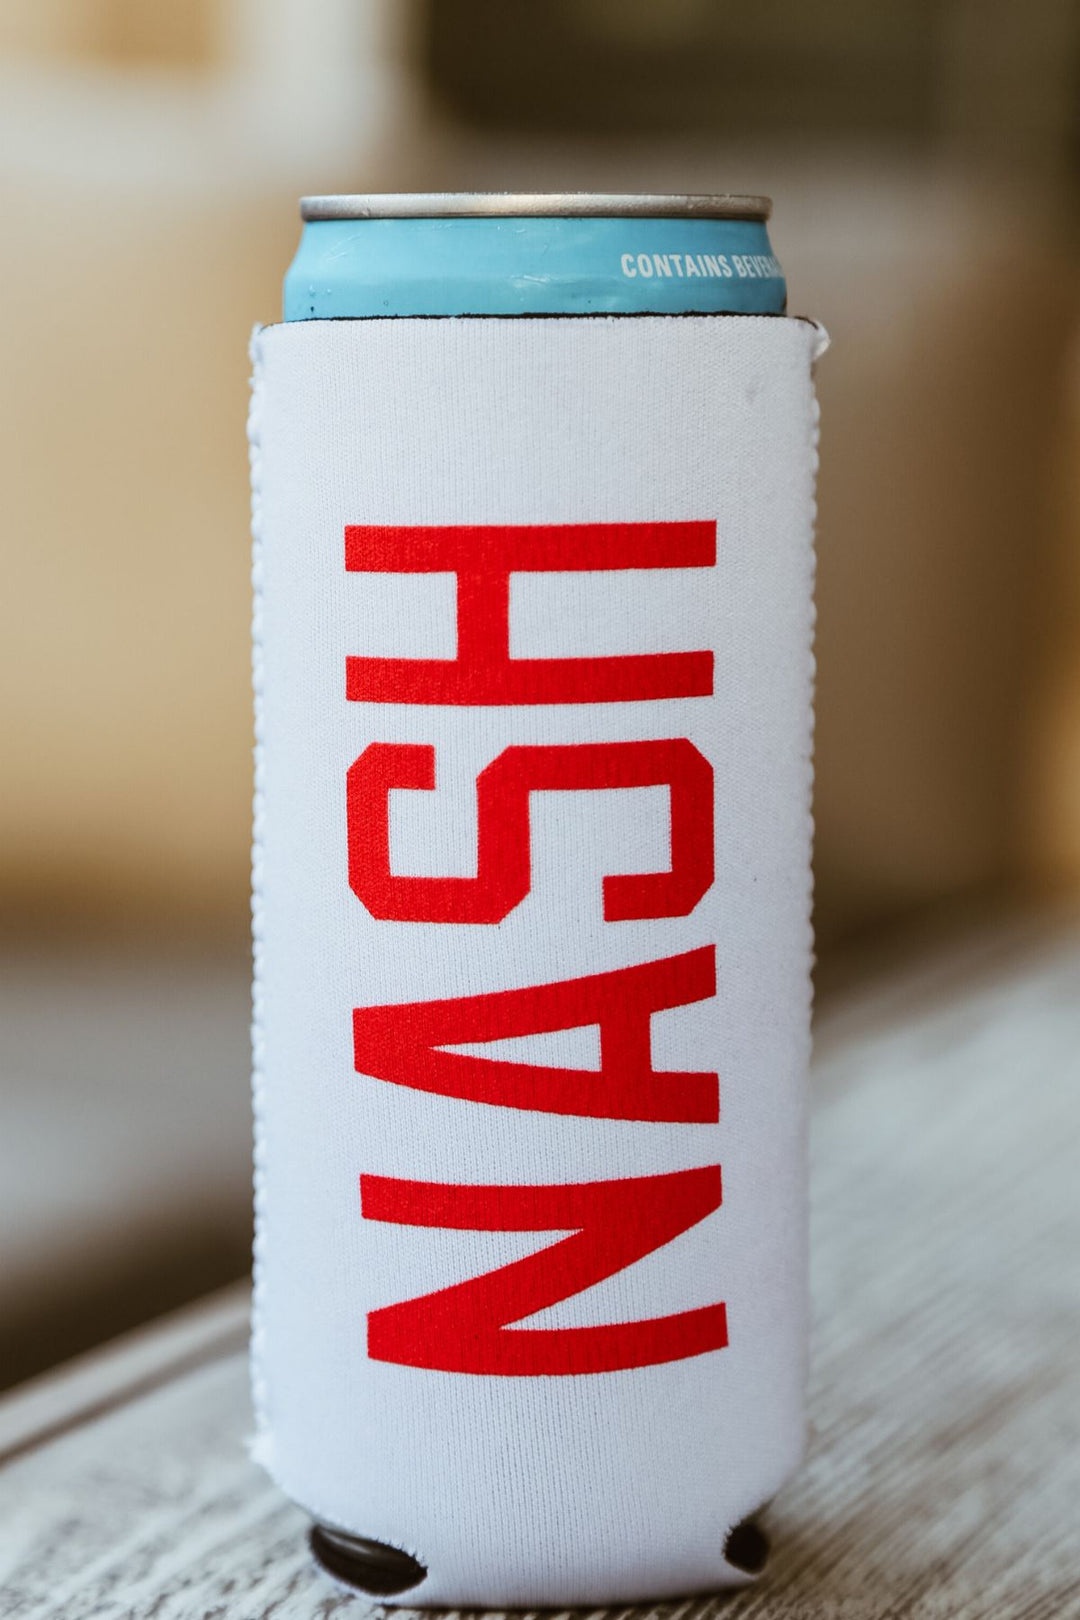 NASH Can + Bottle Coolers - Nashville City Collection